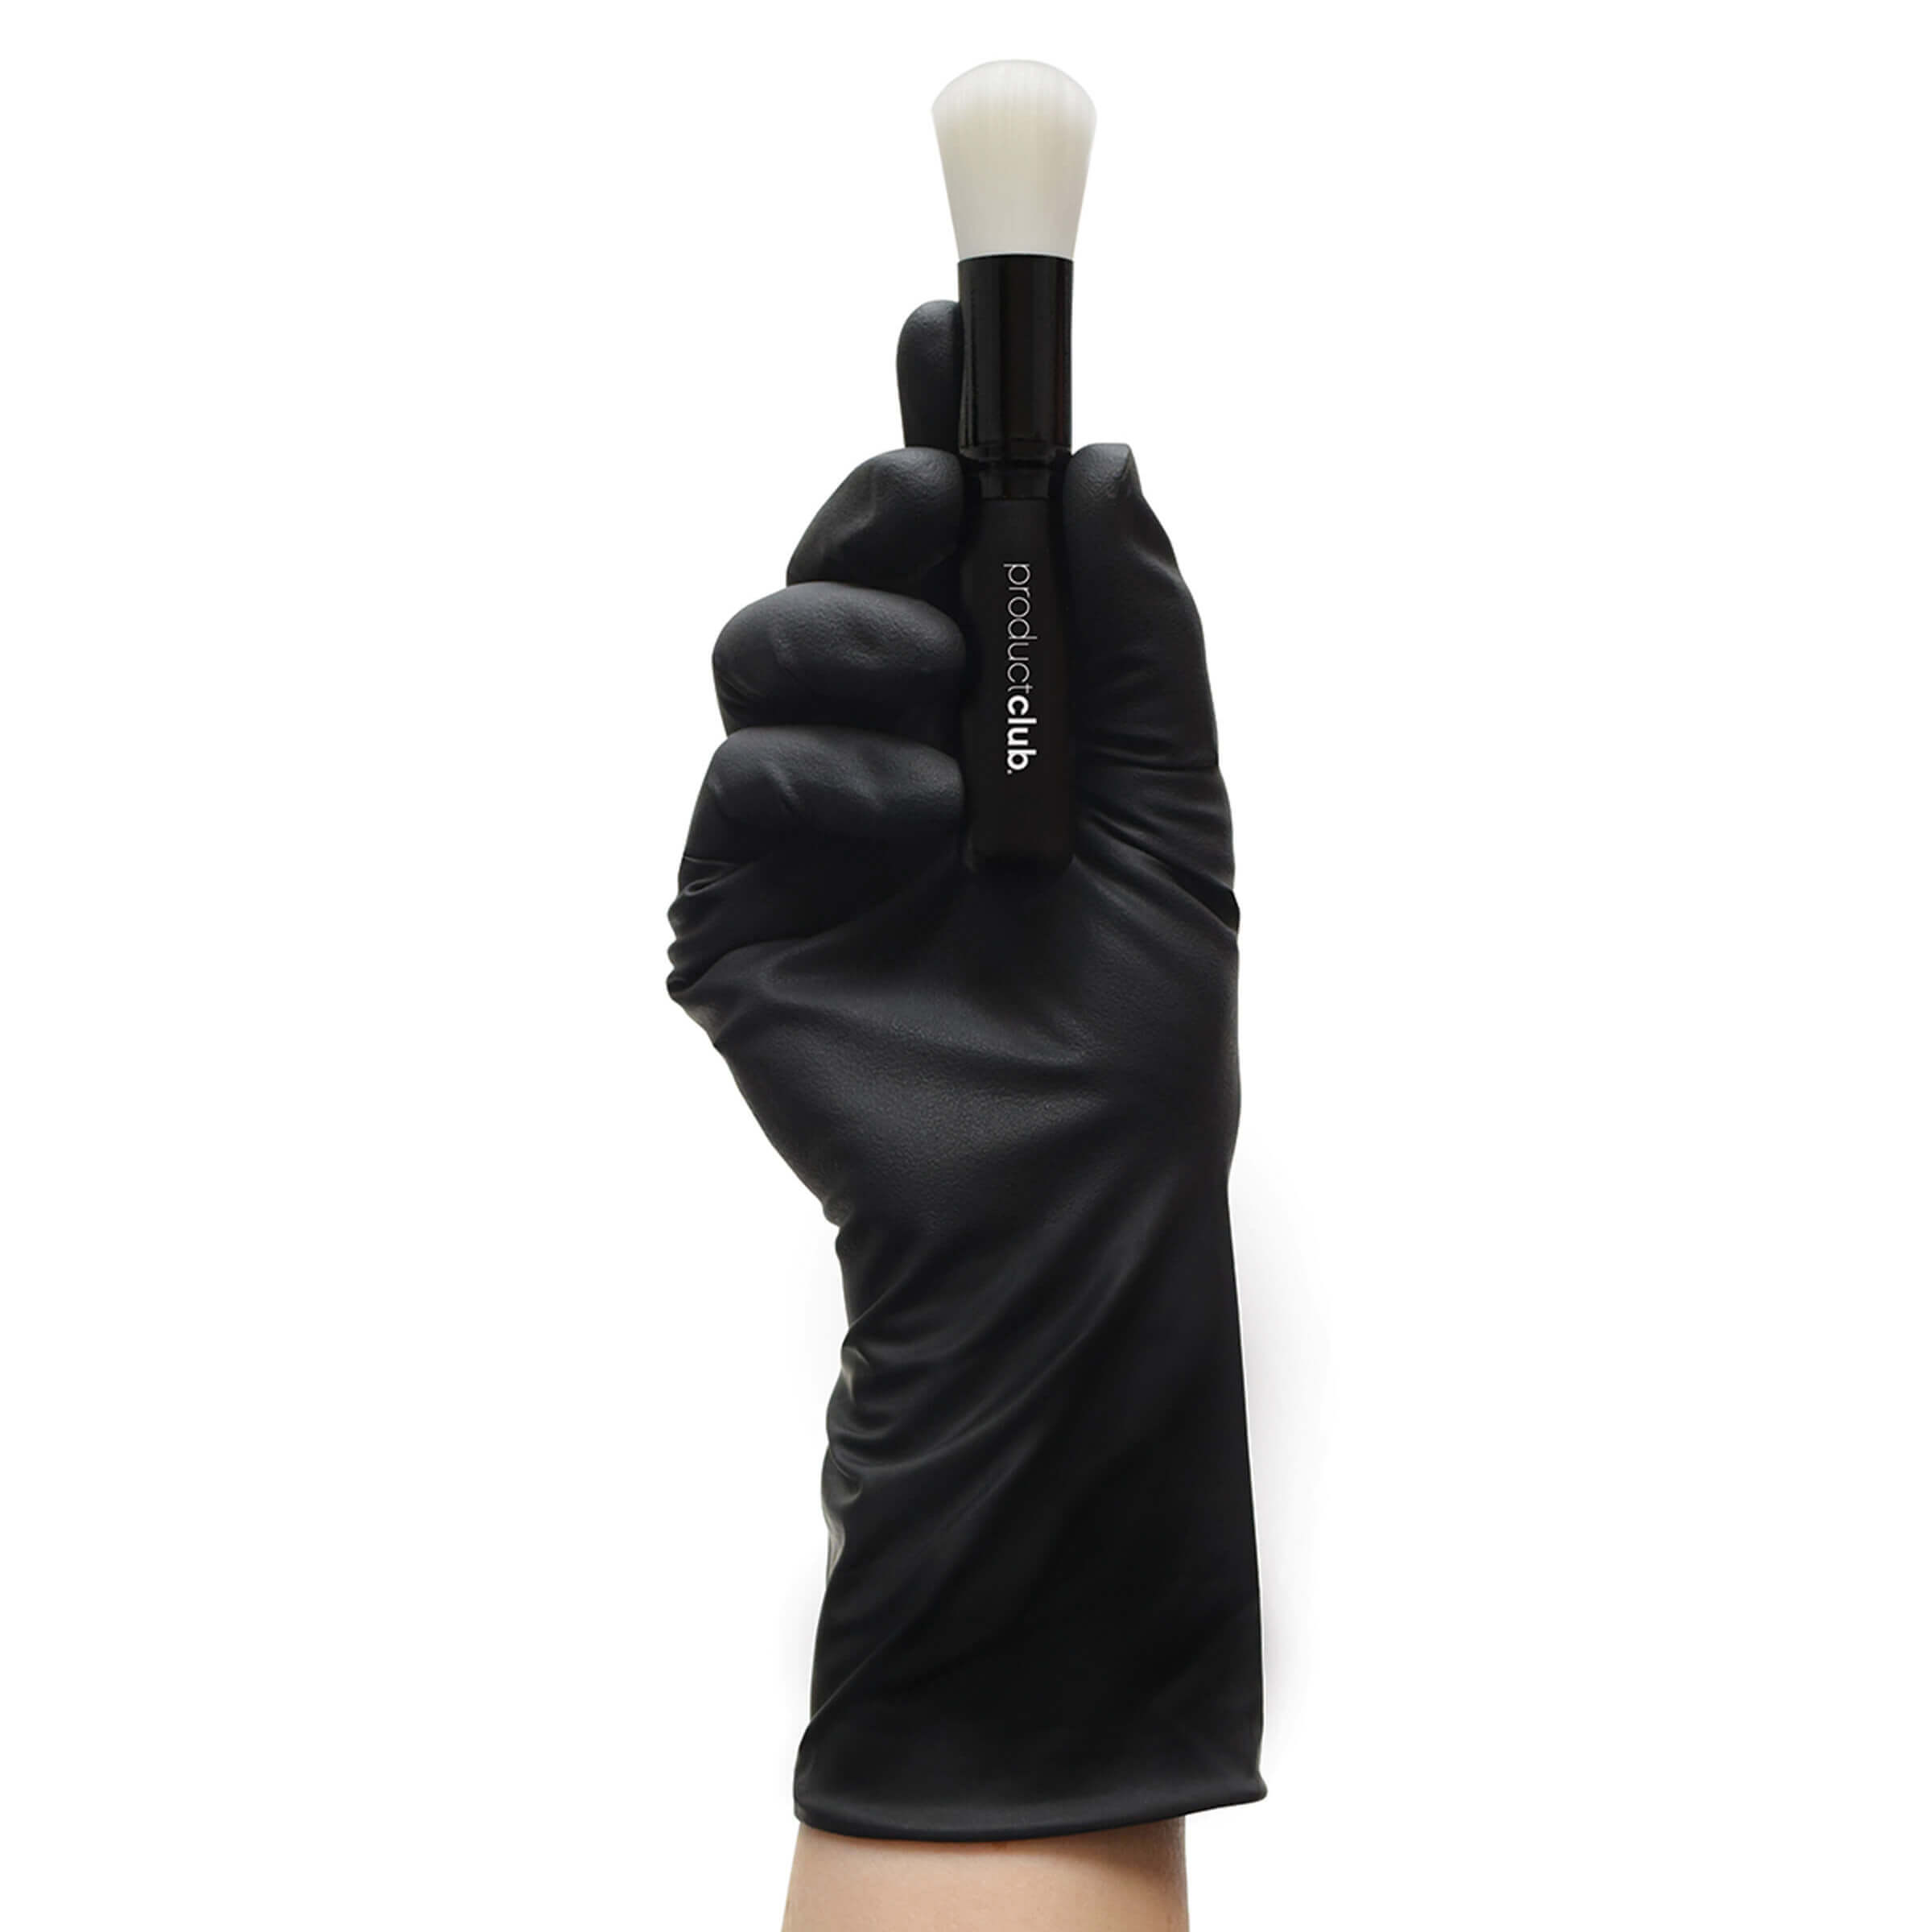 JBLG-12M Reuseable Hair Dye Gloves Medium